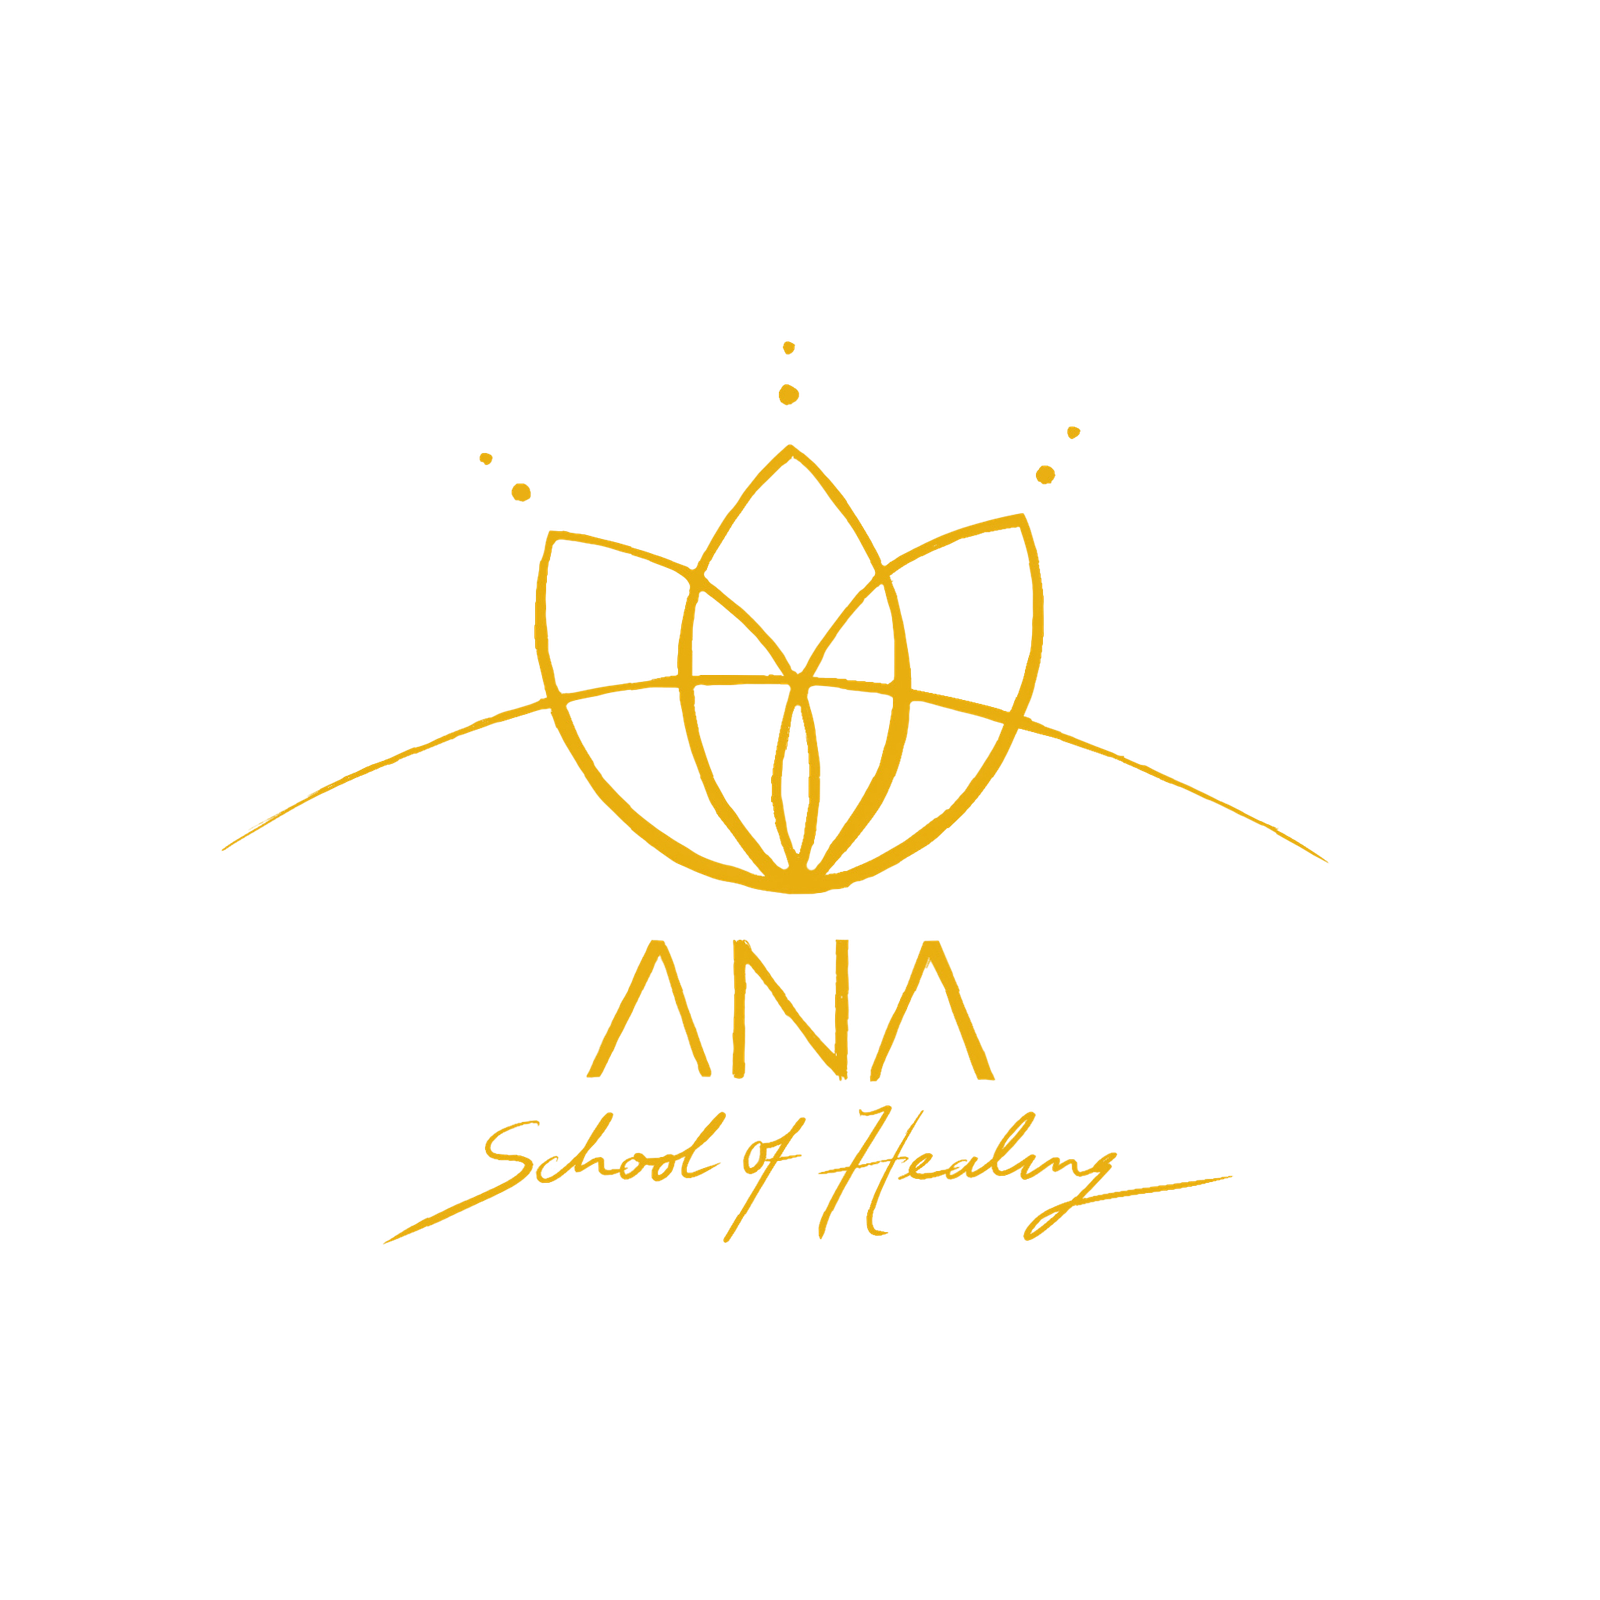 ANA School of Healing Sandra Footer